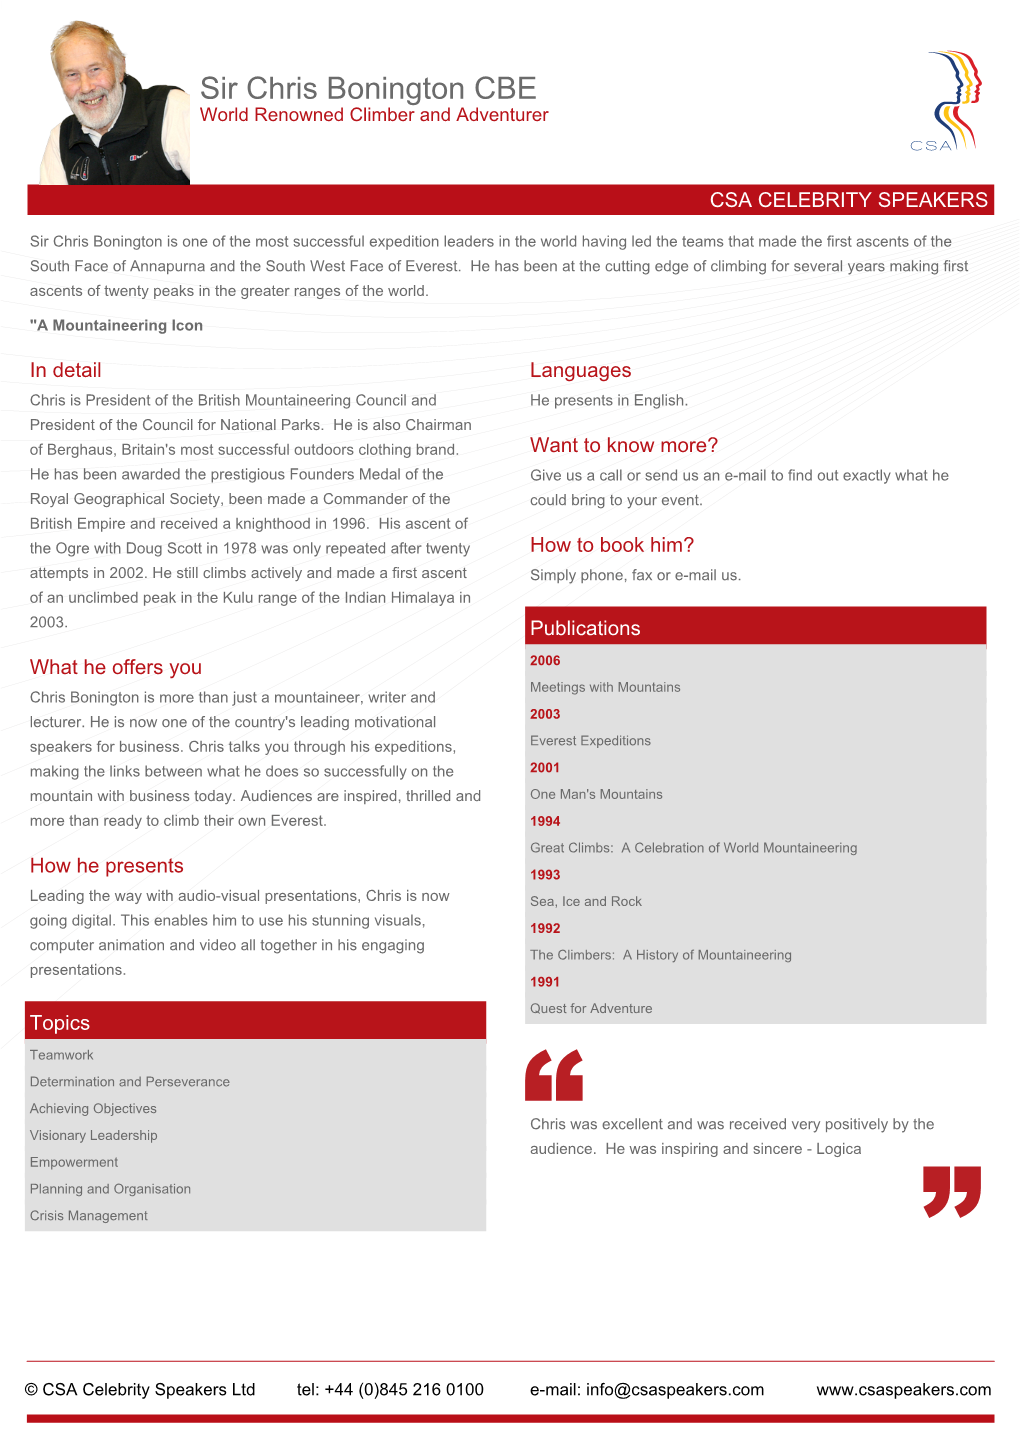 Sir Chris Bonington CBE Speaker Profile